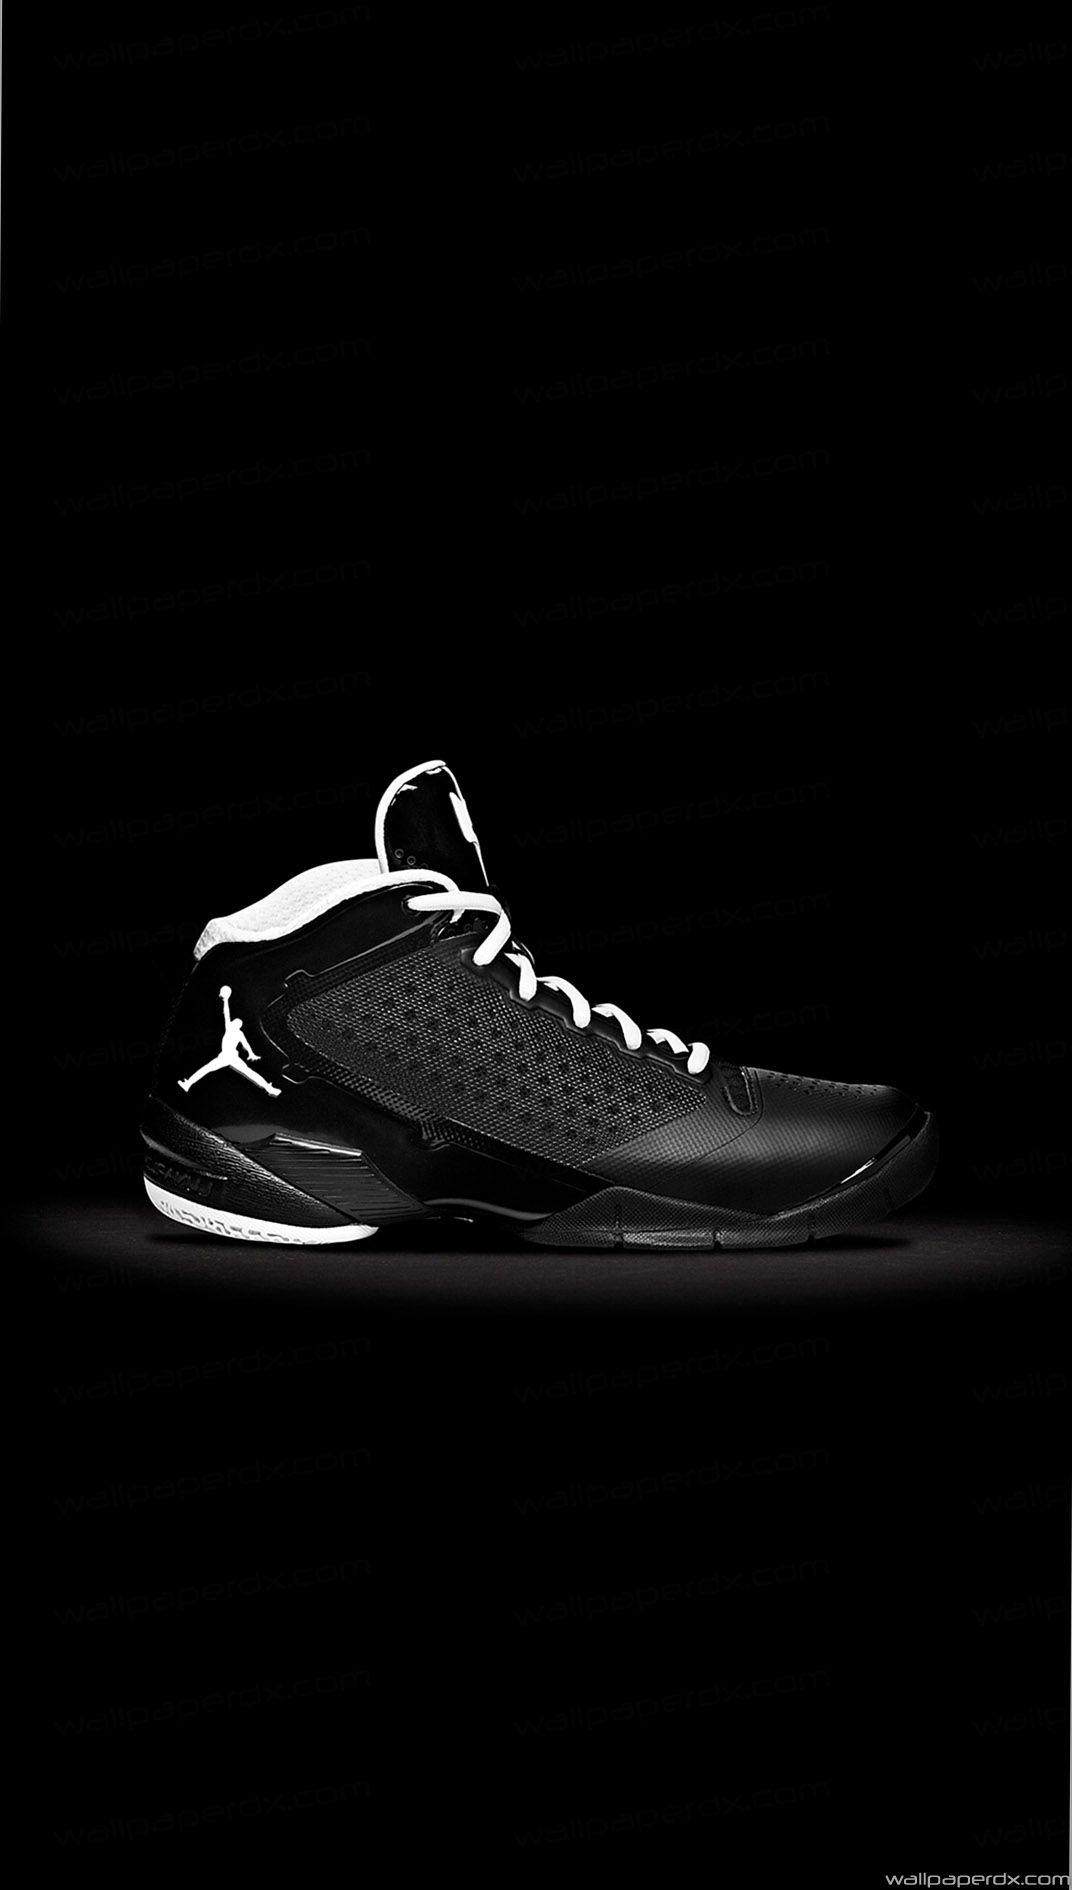 Jordan Fly Wade Nike Shoe Art iphone 6 plus full_hd wallpaper